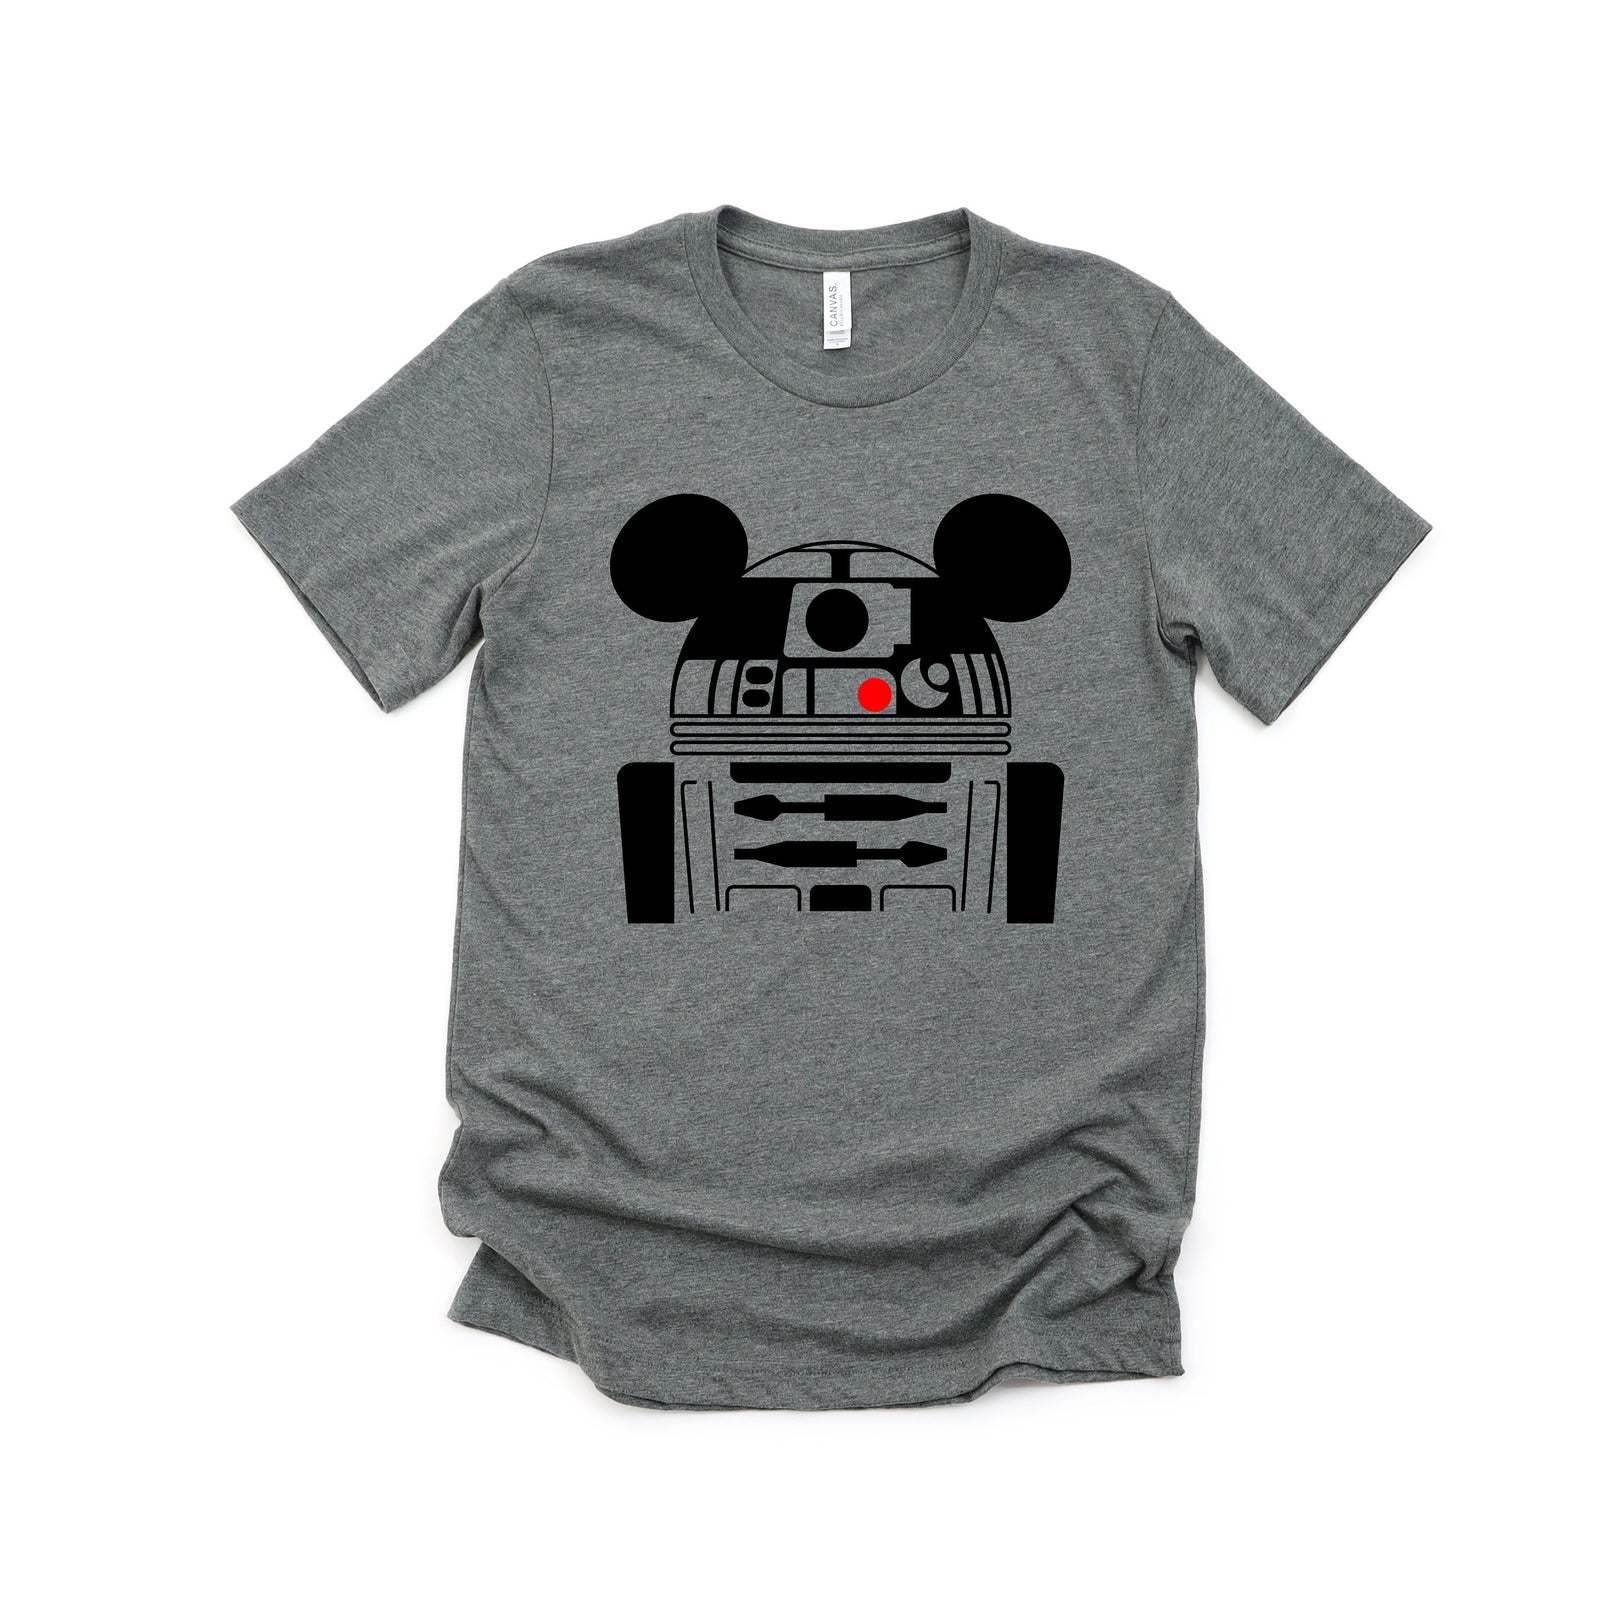 R2D2 with Mickey Ears Disney Star Wars Adult Unisex T-shirt - Star Wars Gift Idea - Star Wars Lover T Shirt